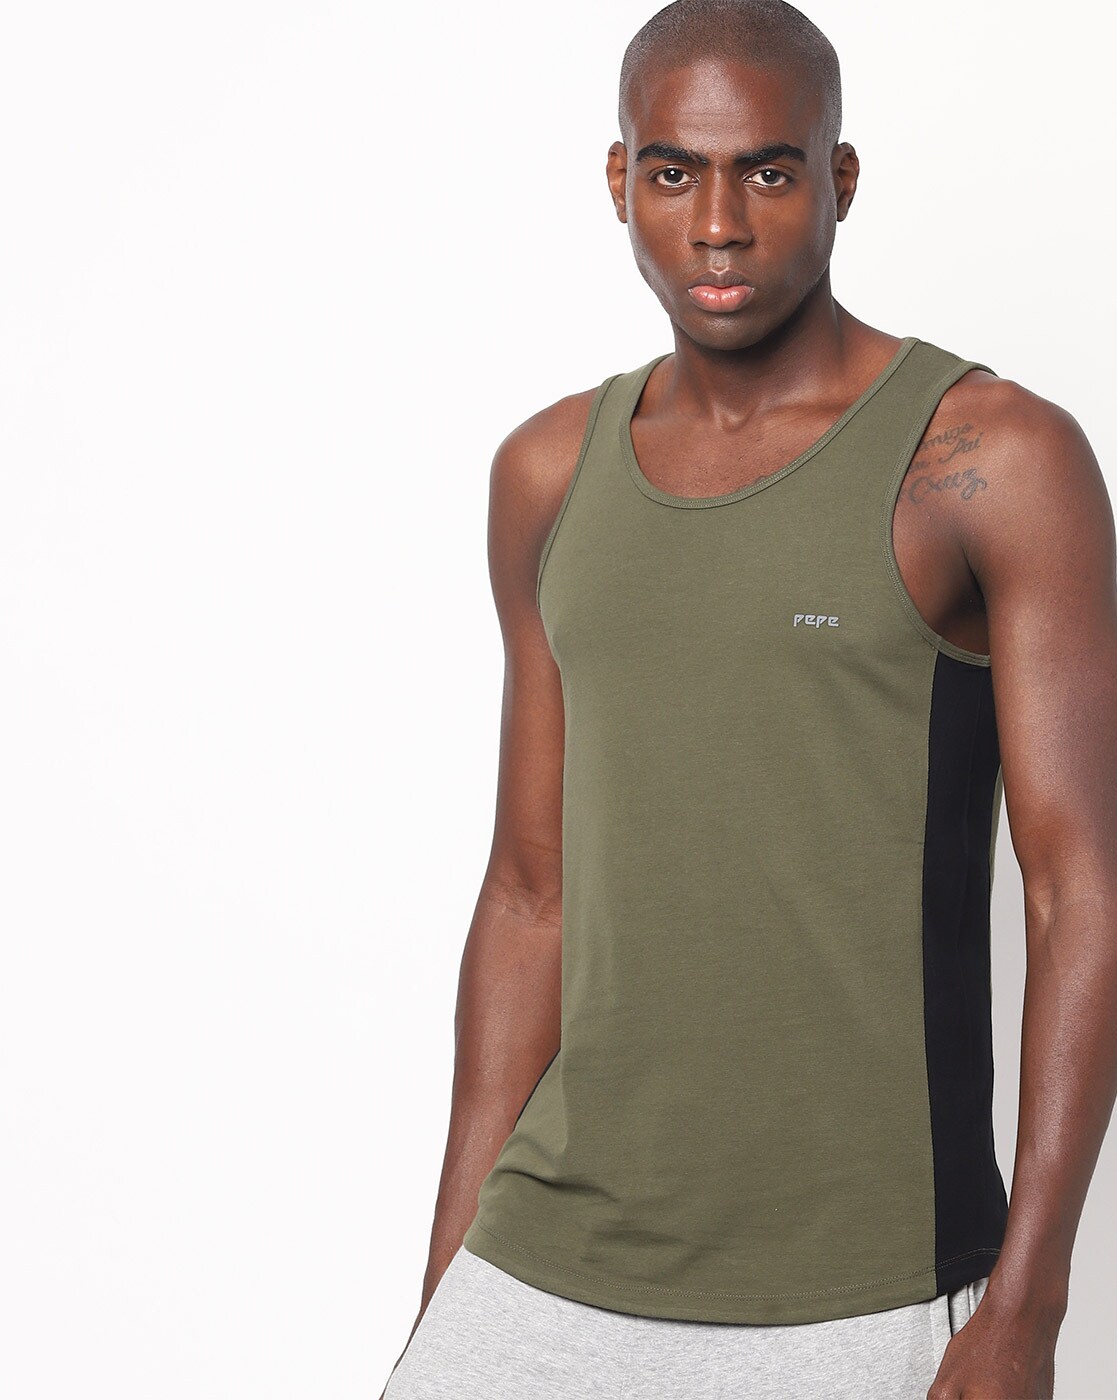 Buy Olive Green Vests for Men by Pepe Online